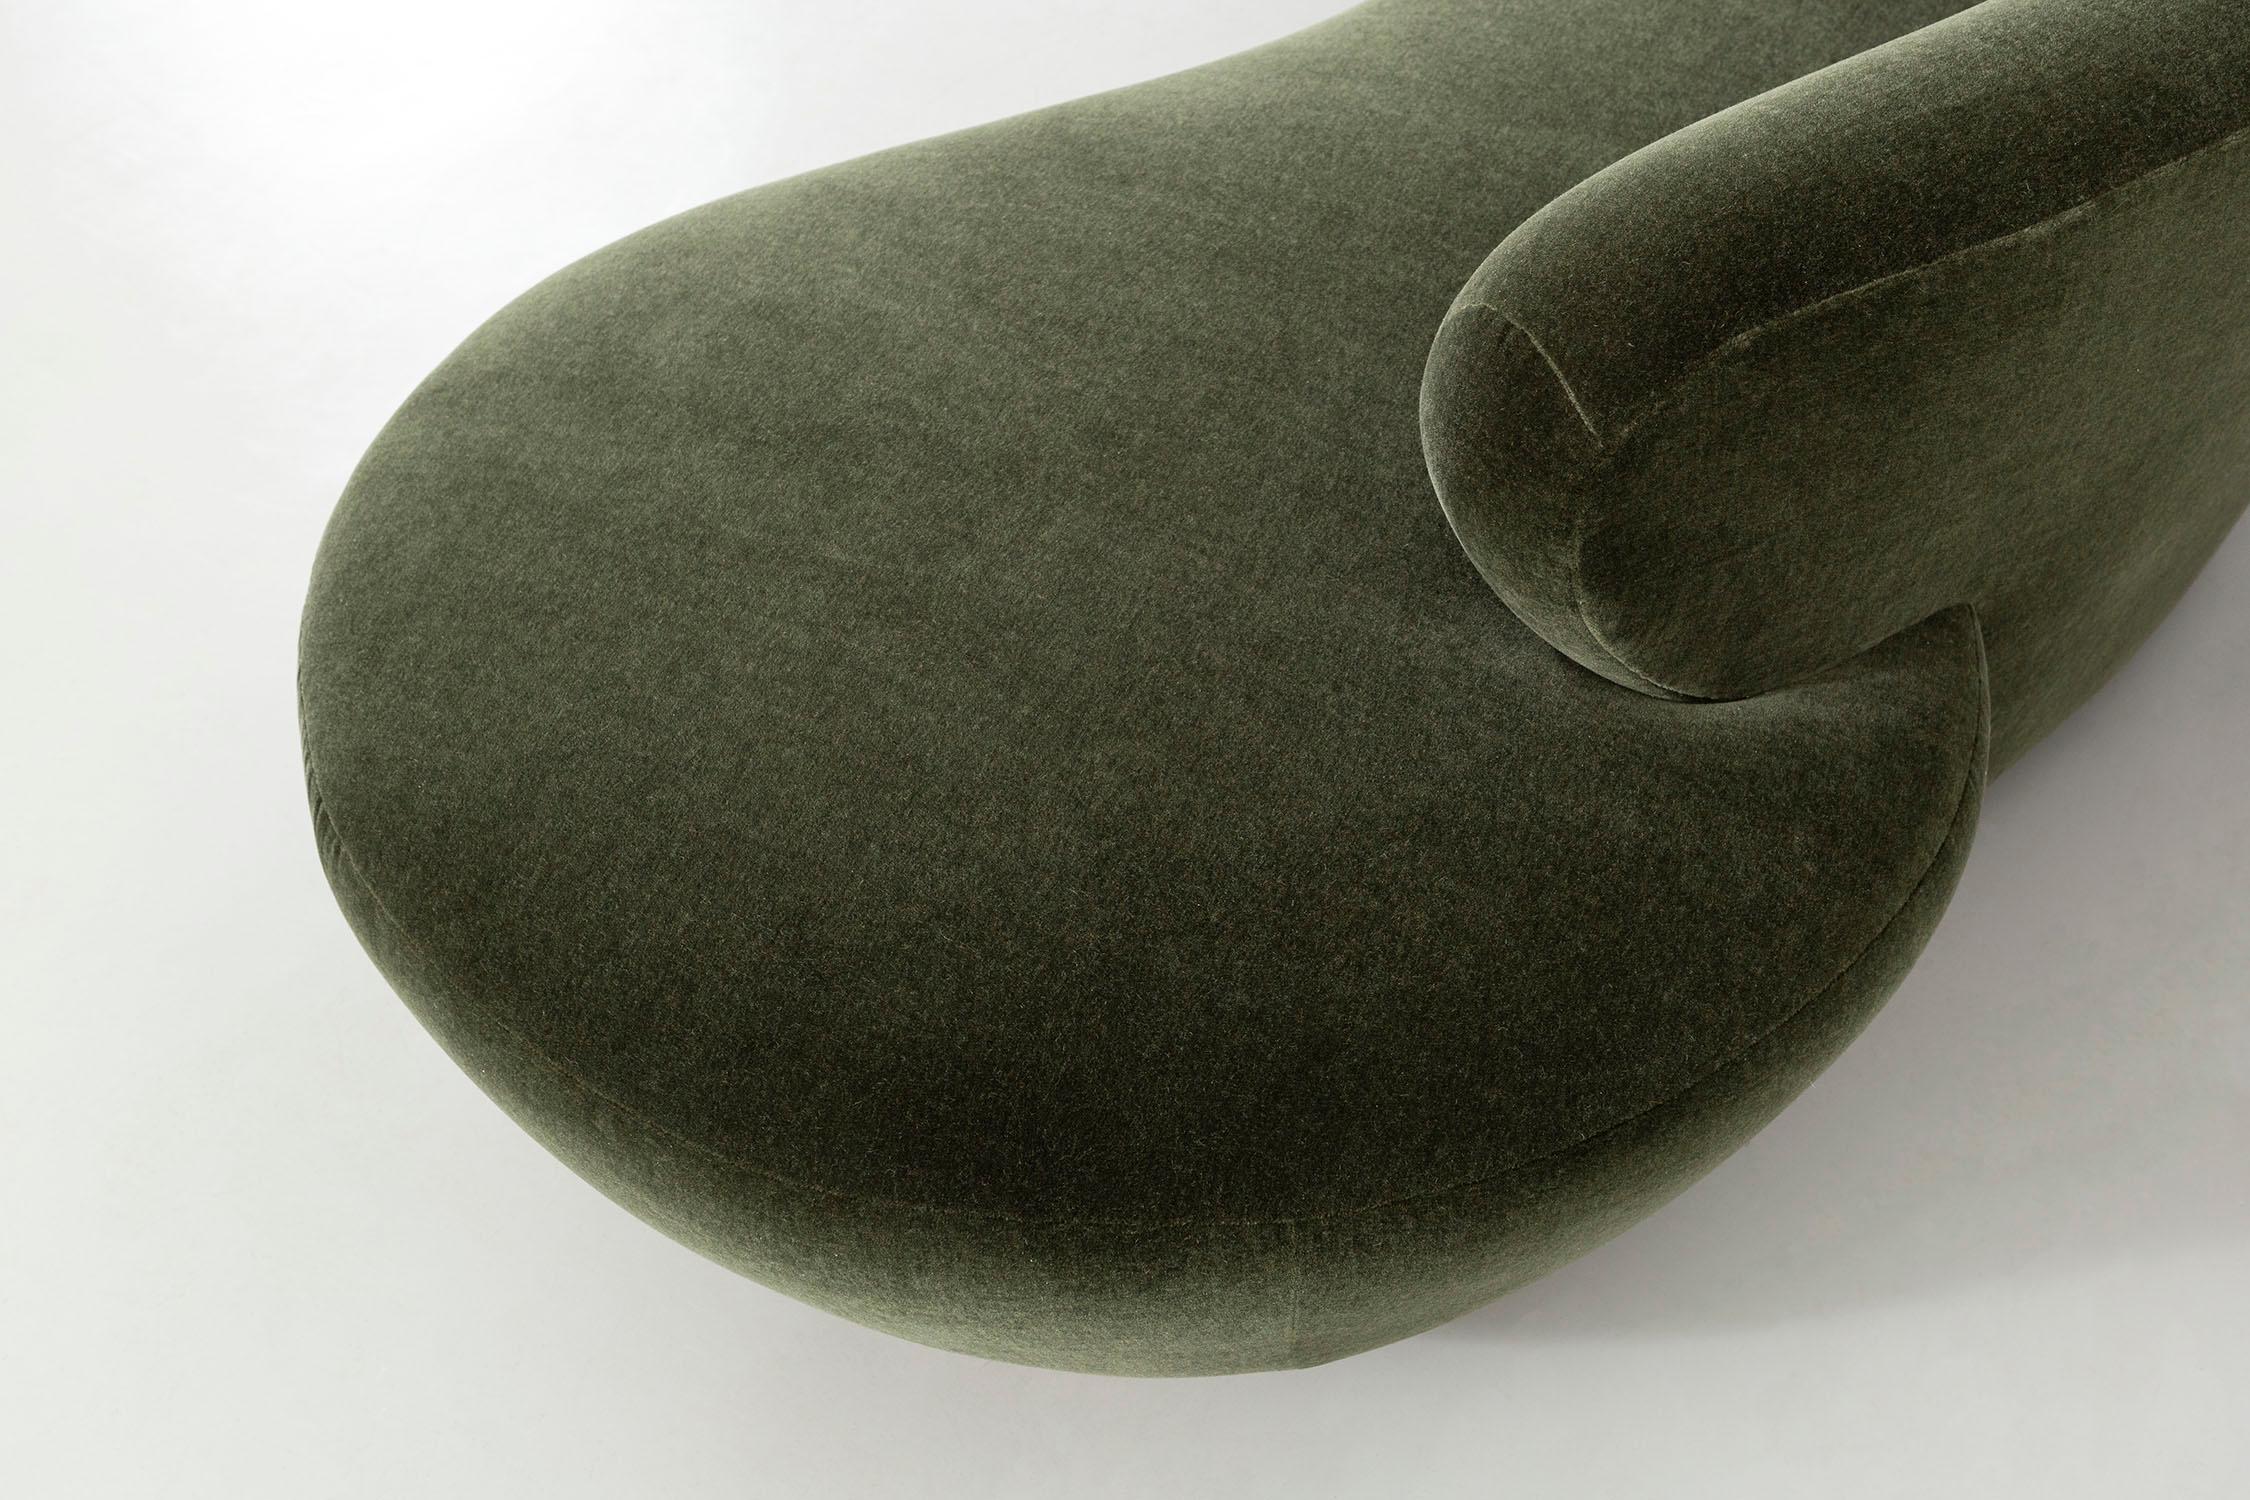 Late 20th Century Vladimir Kagan for Directional Cloud Sofa Freshly Reupholstered in Mohair